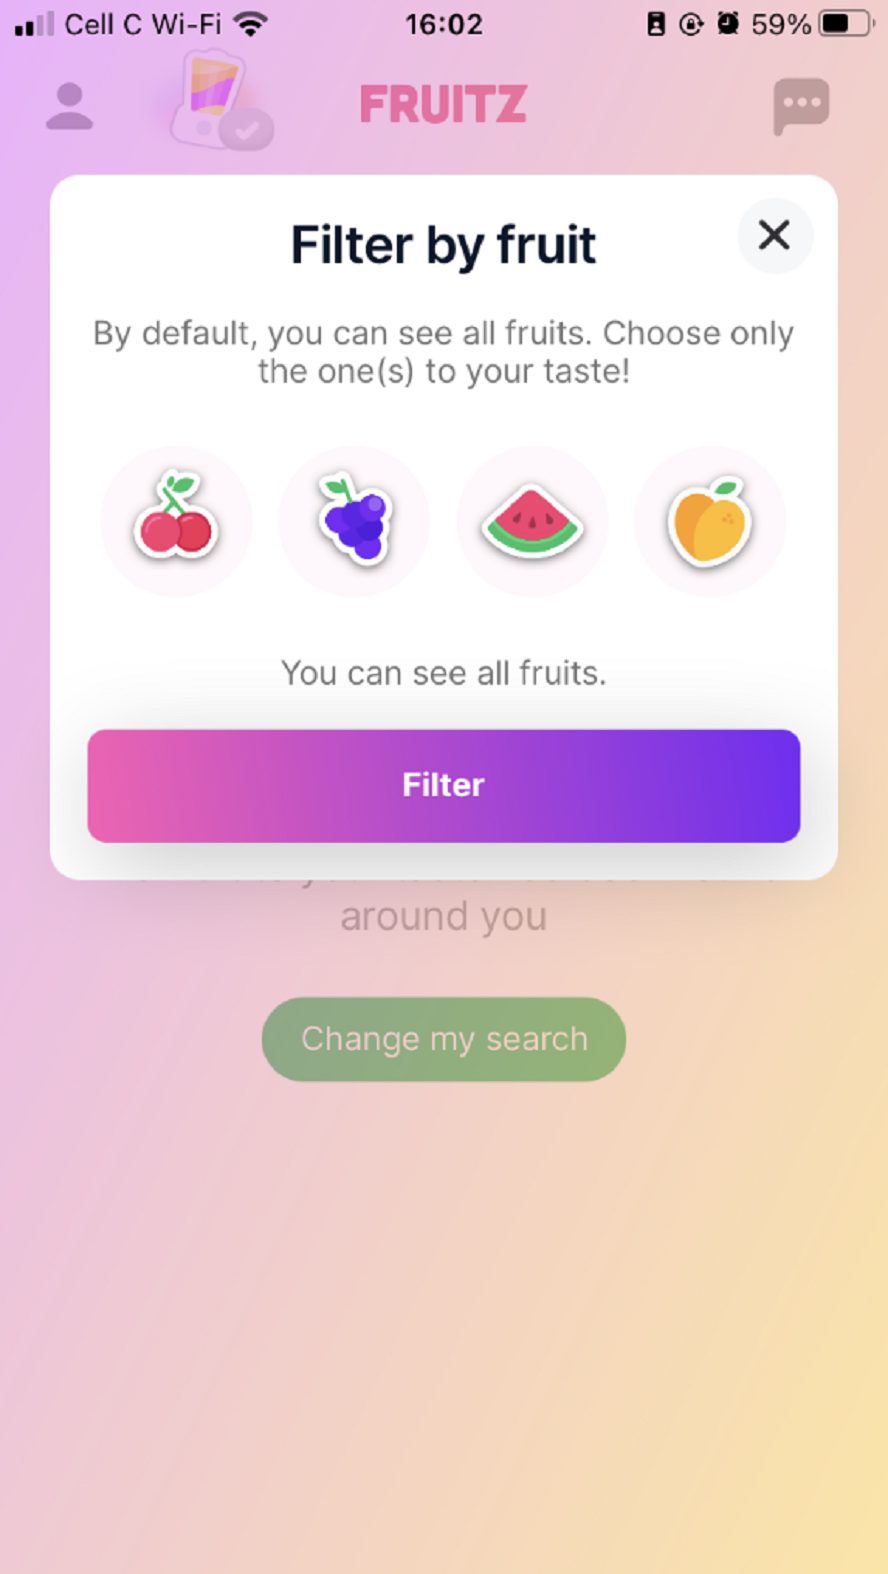 Fruitz Filter by Fruit